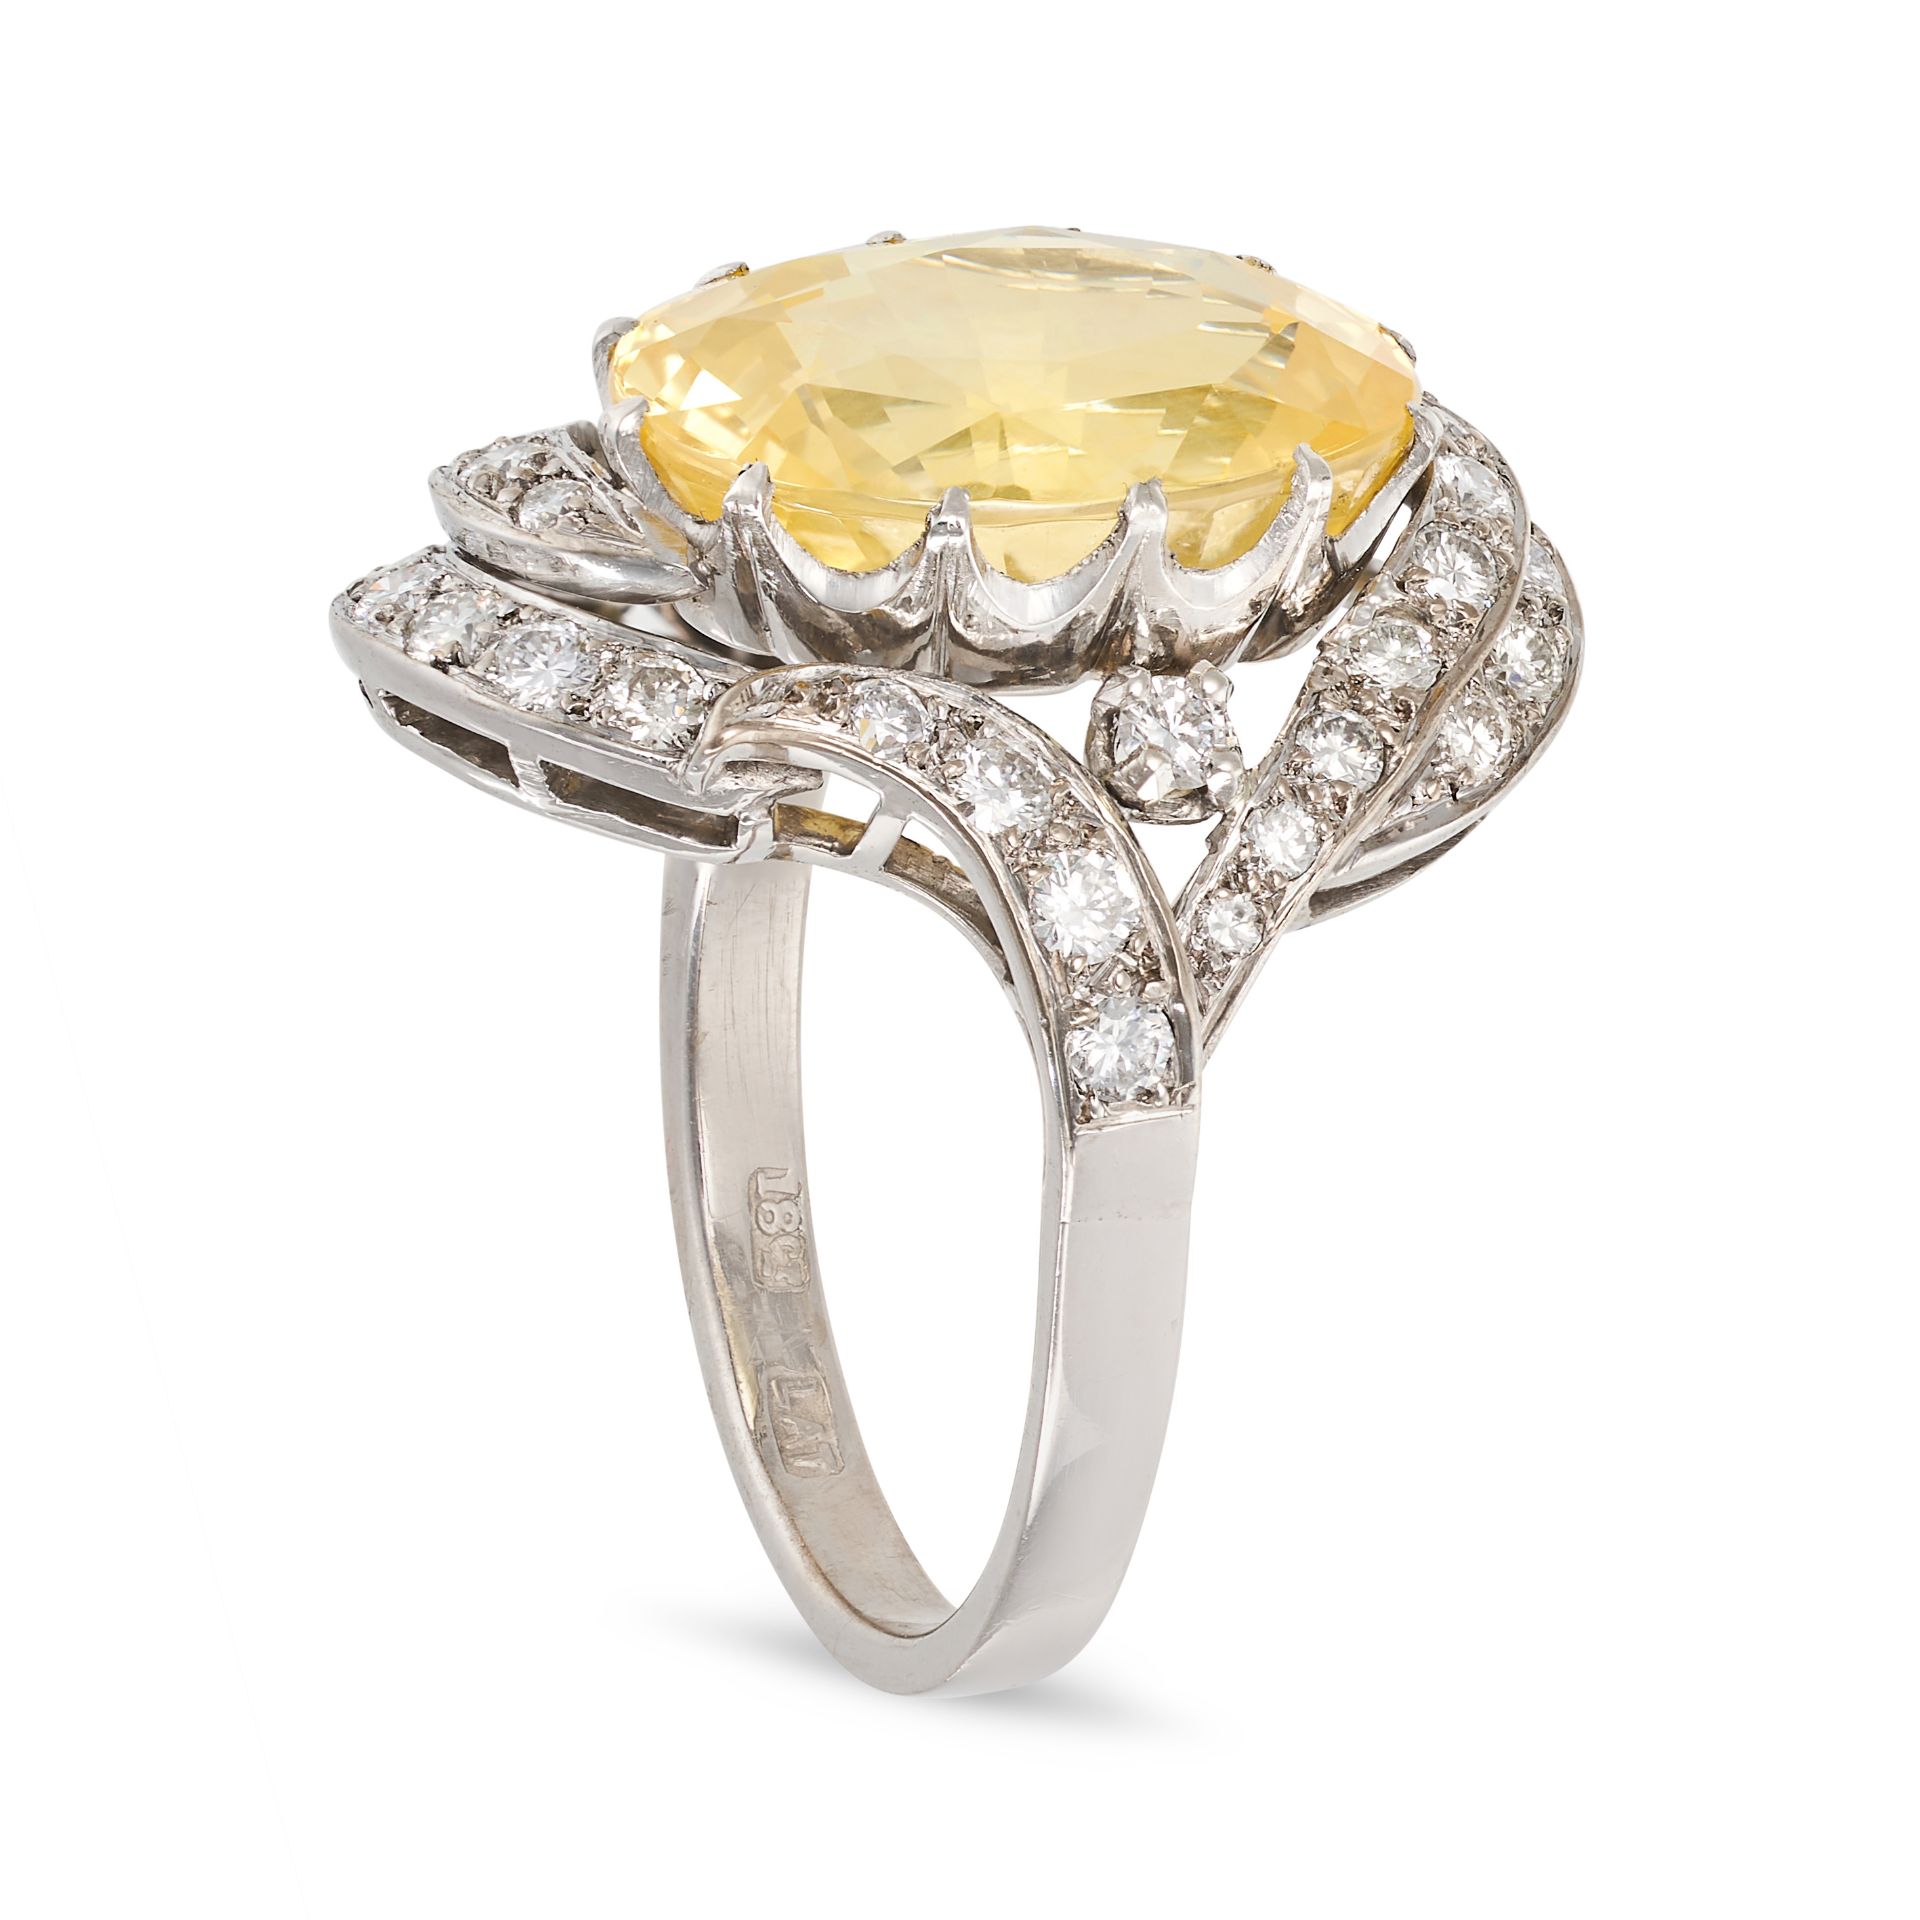 A CEYLON NO HEAT YELLOW SAPPHIRE AND DIAMOND RING in 18ct white gold and platinum, set with an ov... - Bild 2 aus 2